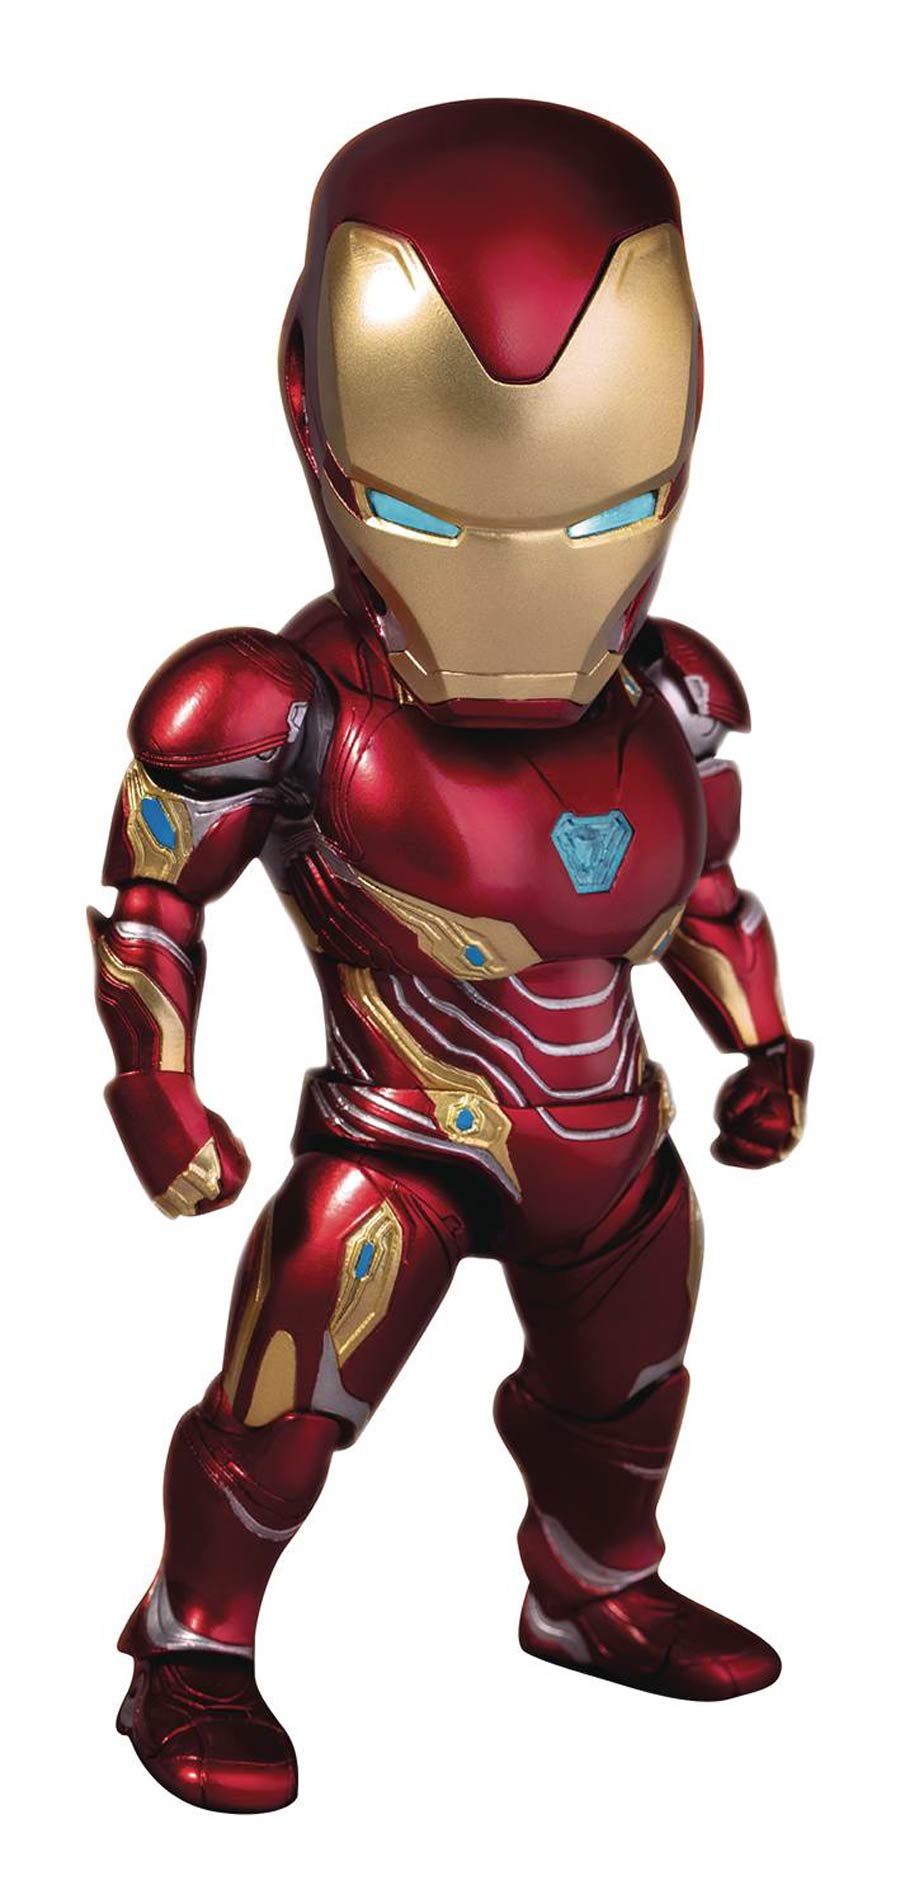 Avengers Infinity War EAA-070 Iron Man MK50 Previews Exclusive Action Figure